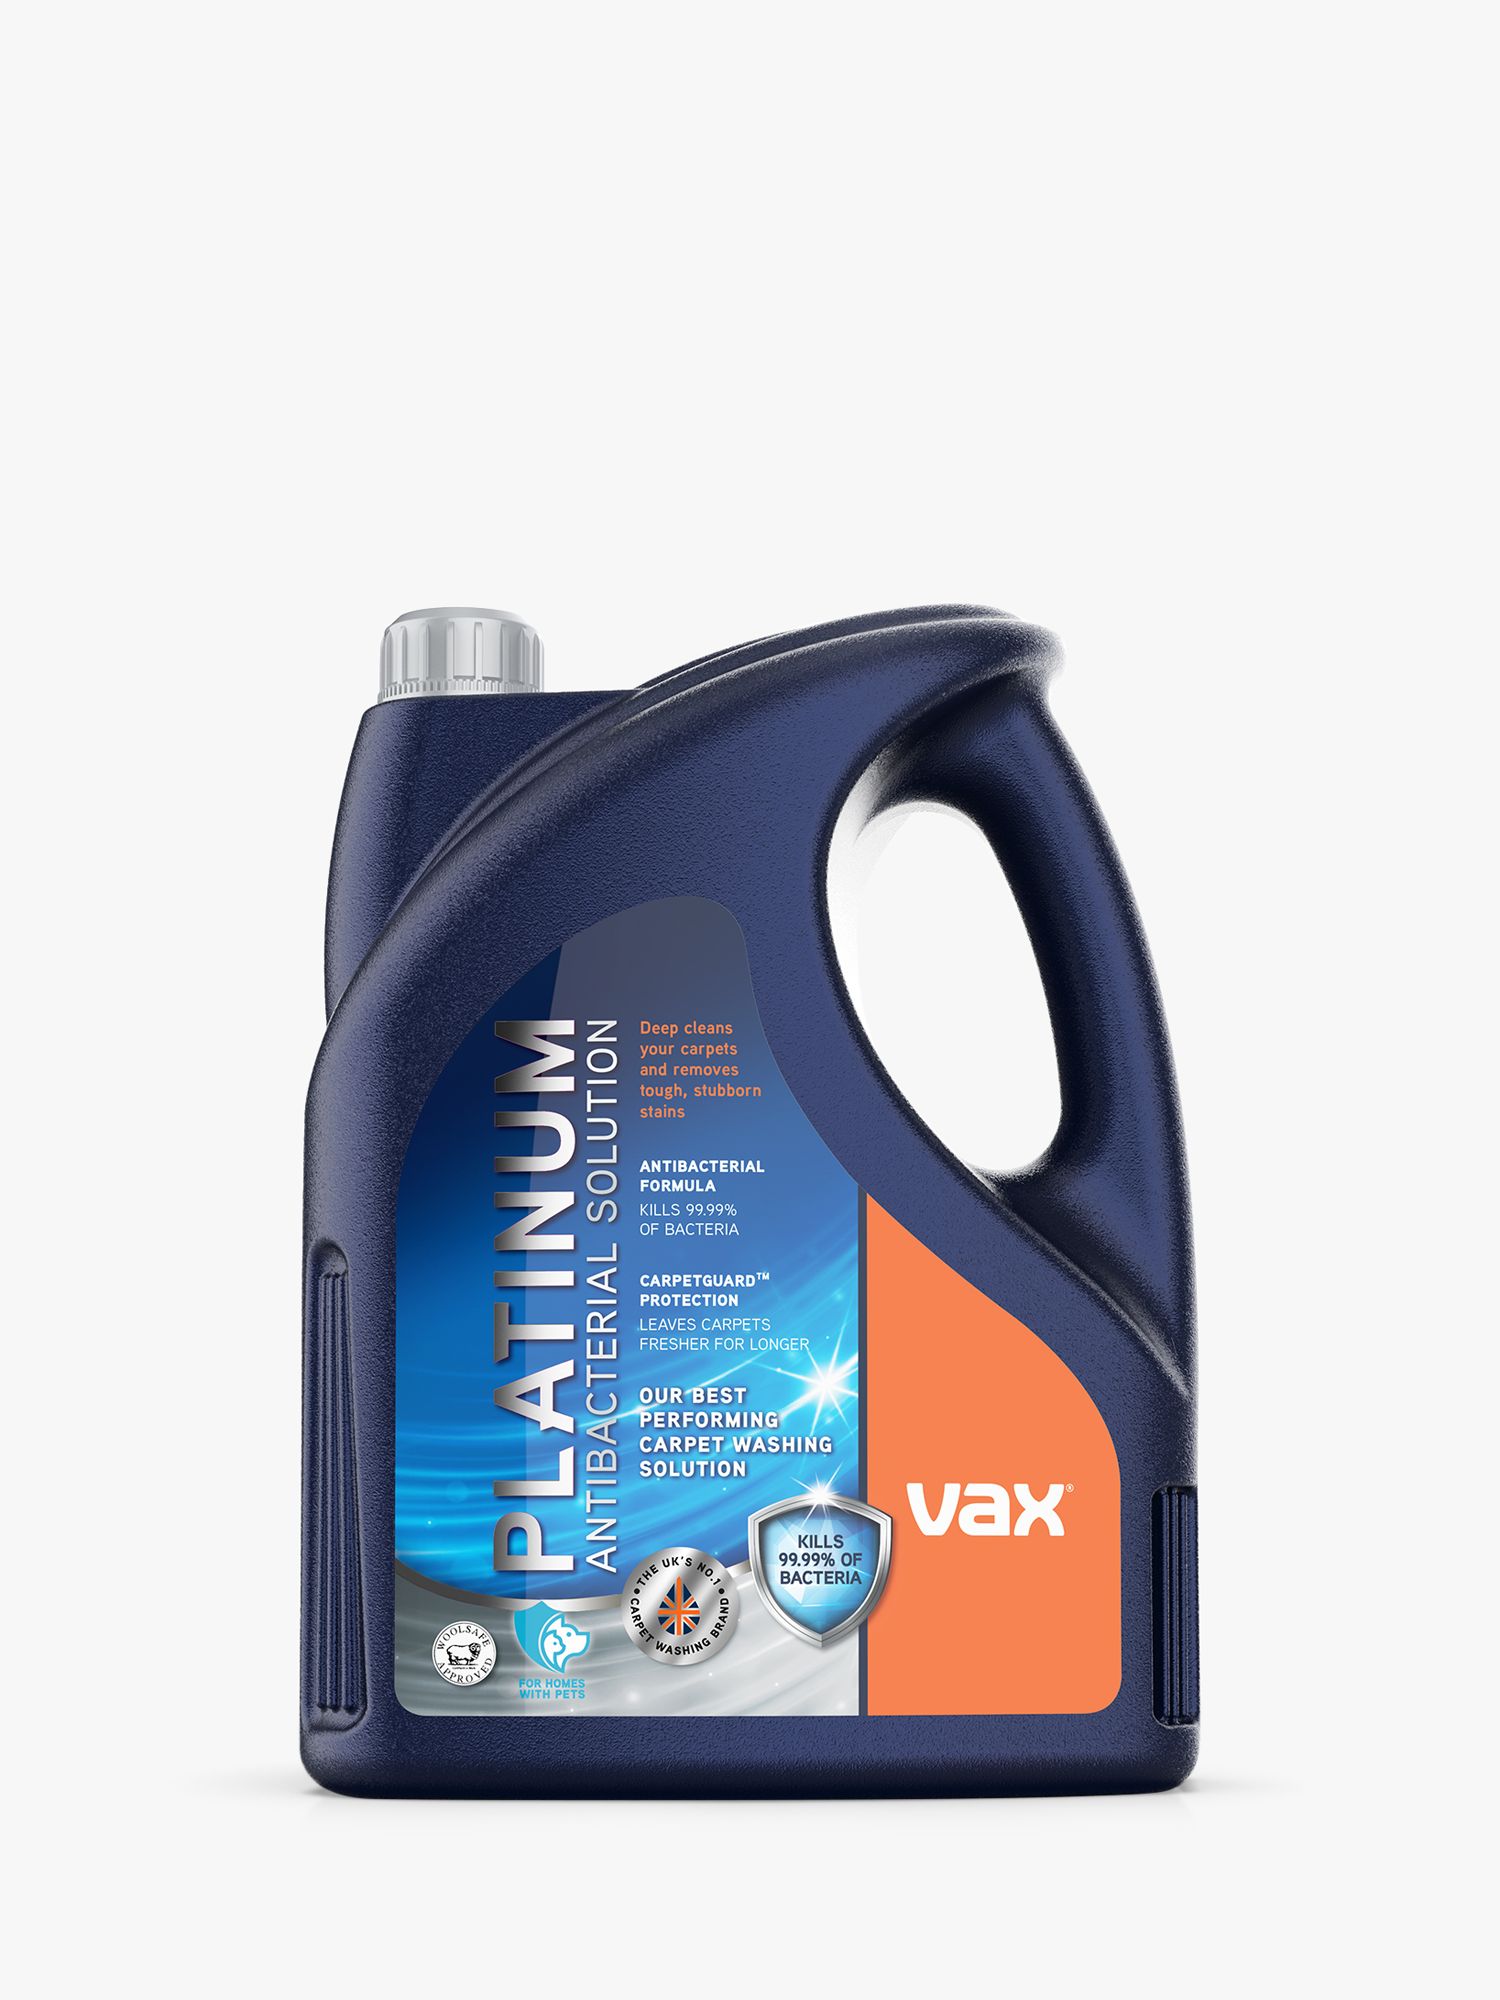 Vax Platinum Antibacterial Carpet